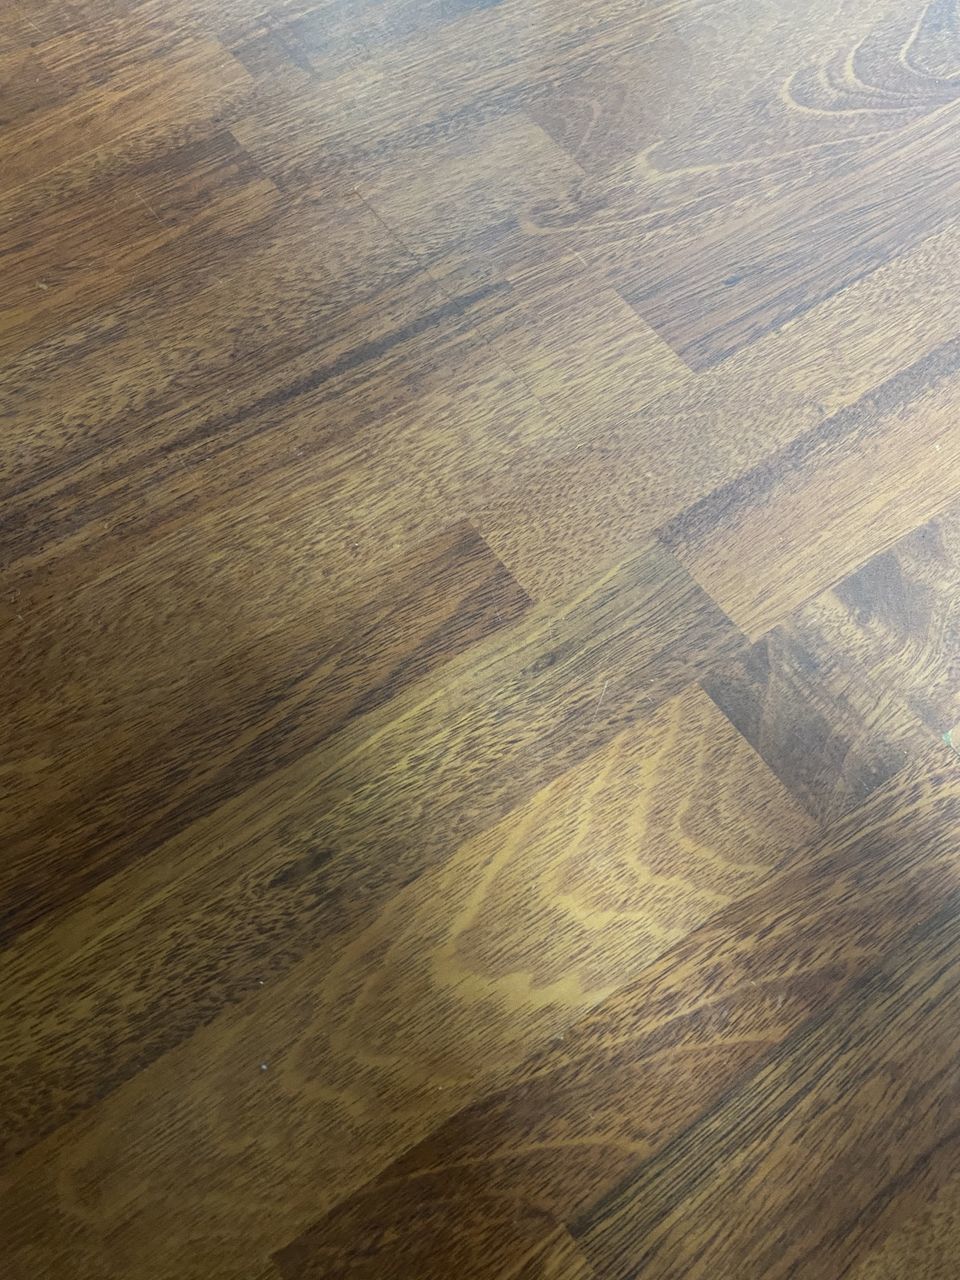 backgrounds, wood flooring, laminate flooring, floor, hardwood, pattern, wood, full frame, flooring, textured, no people, brown, wood grain, hardwood floor, indoors, high angle view, close-up, wood stain, plank, nature